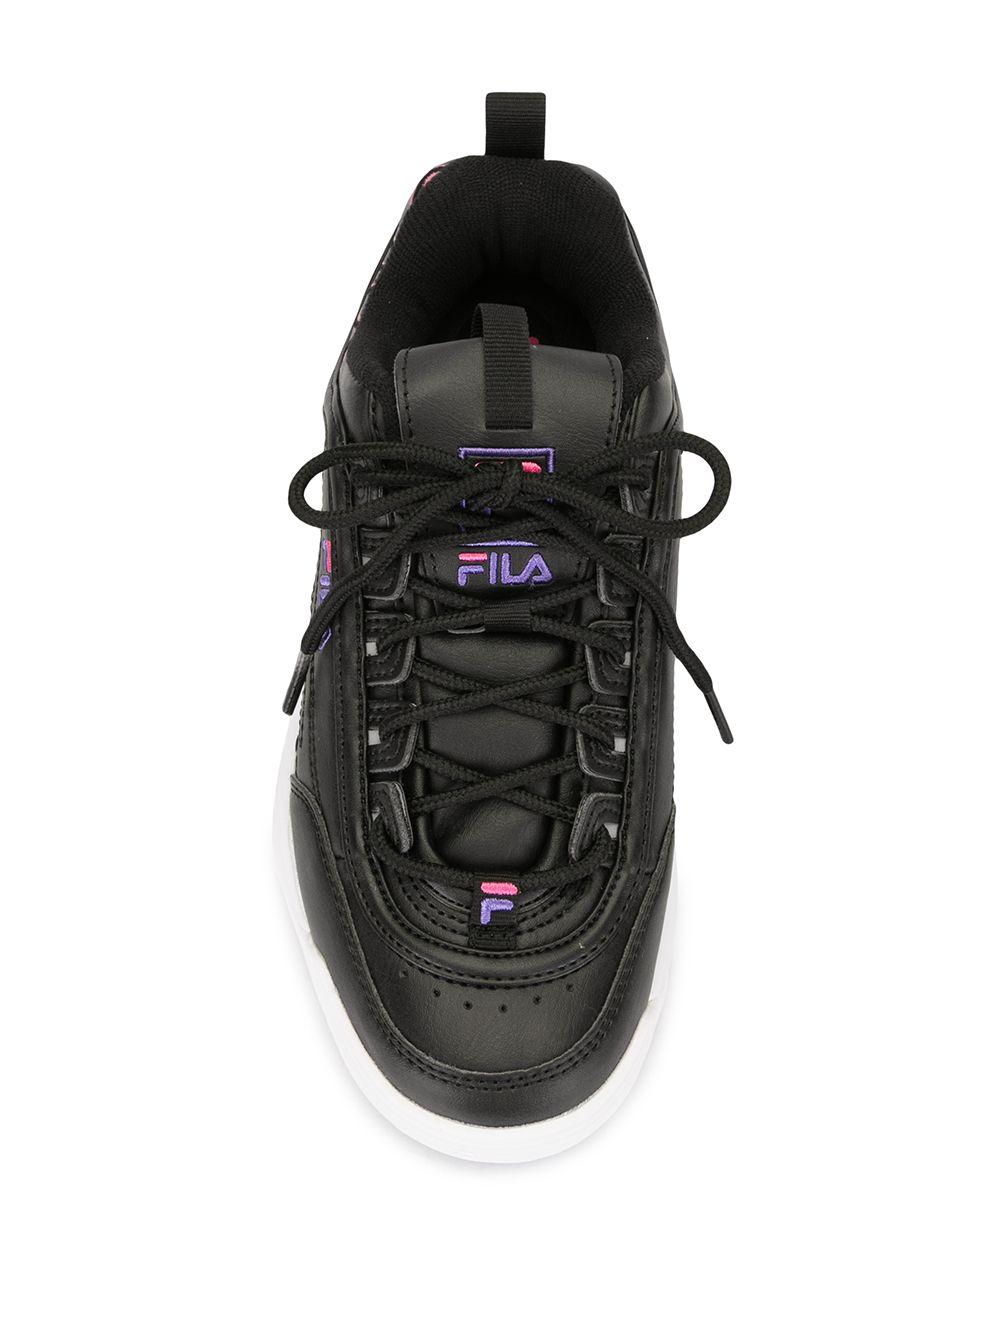 Fila Disruptor Floral Sneakers in Black | Lyst